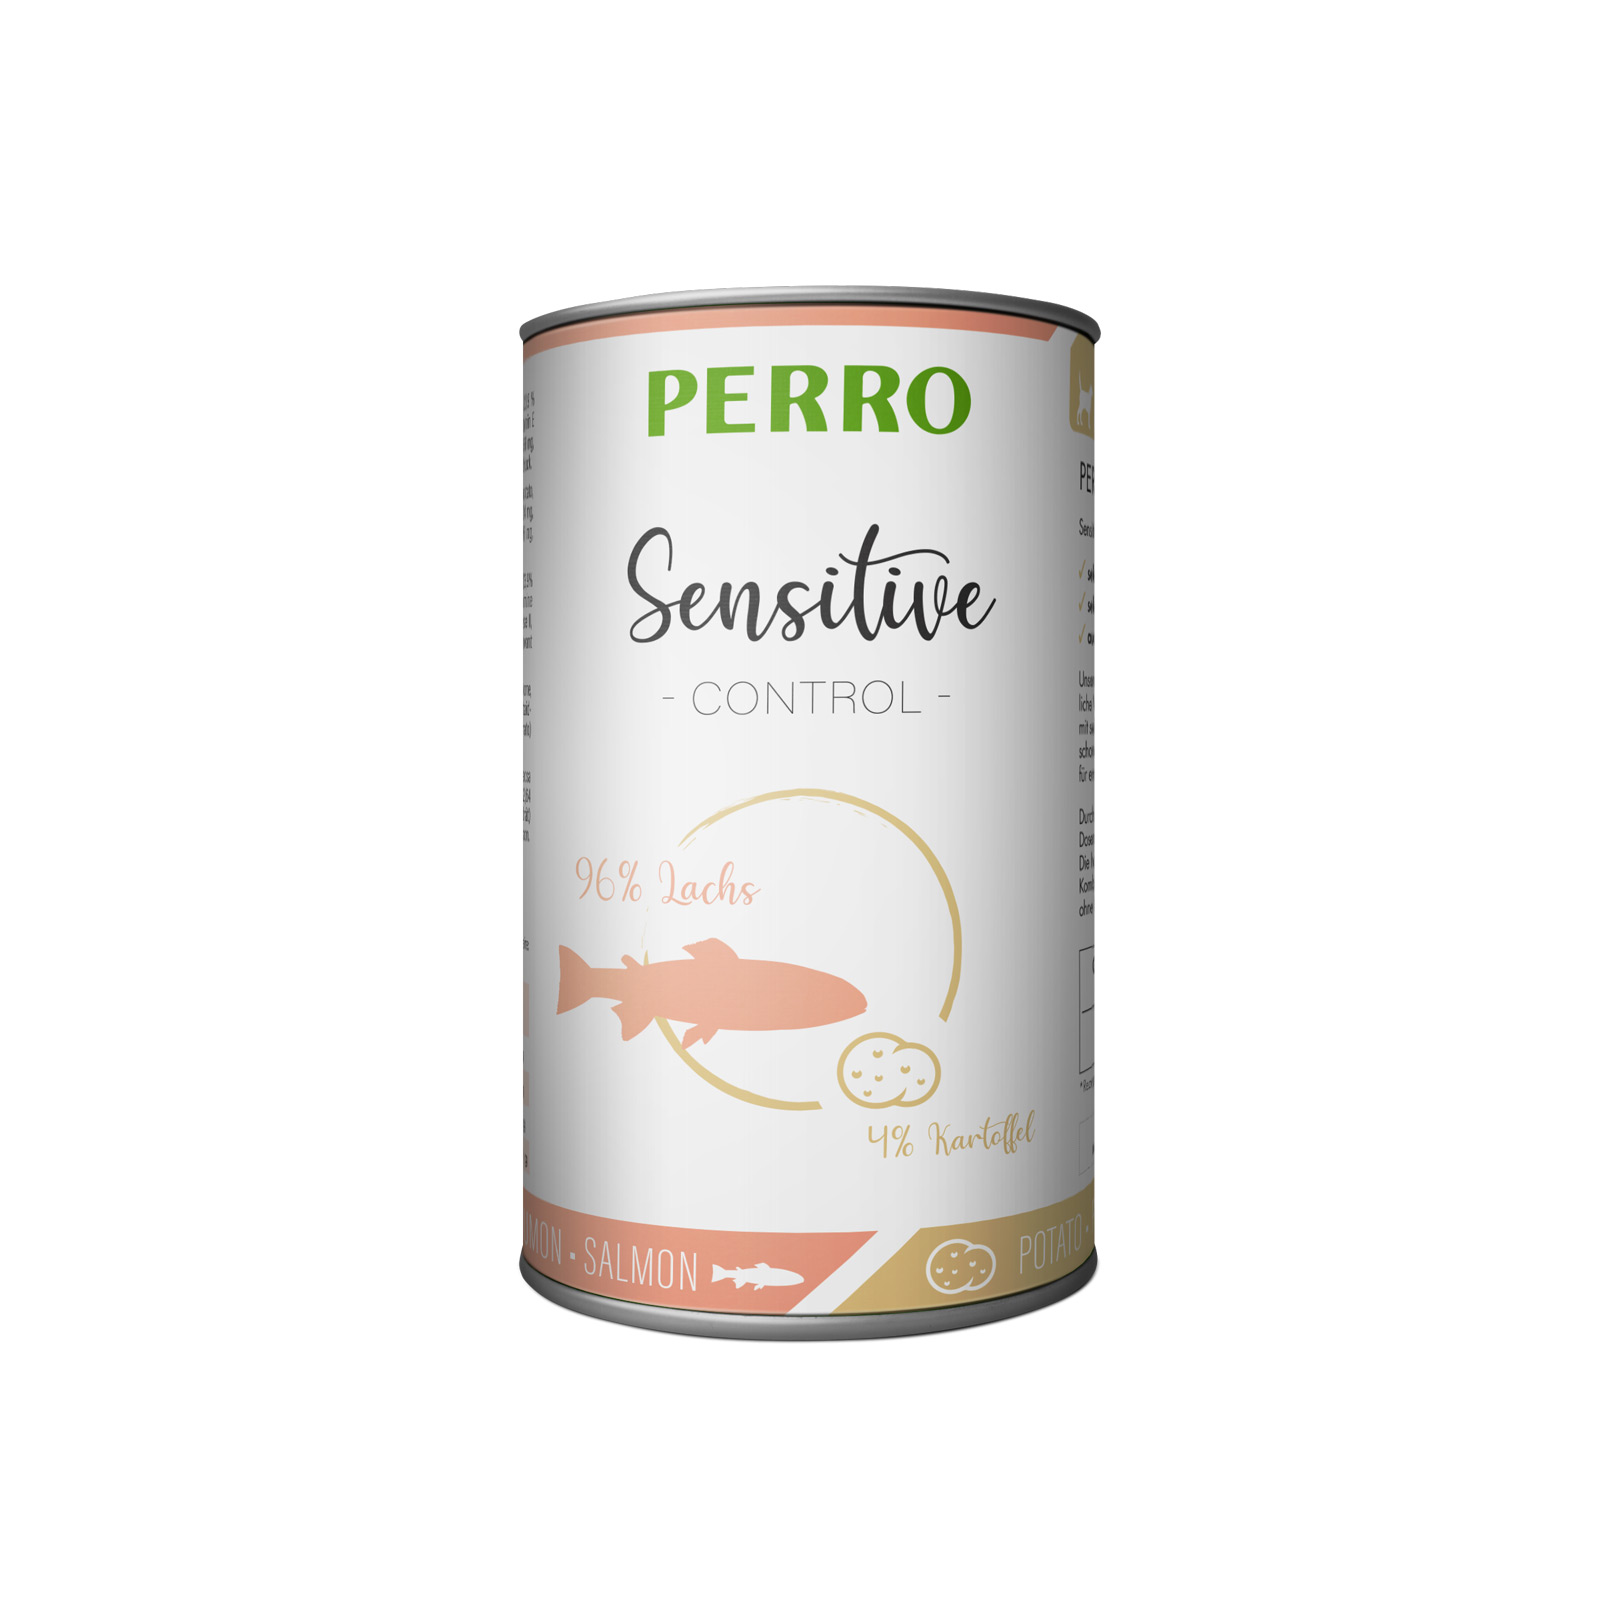 PERRO Sensitive Control Lachs + Kartoffeln